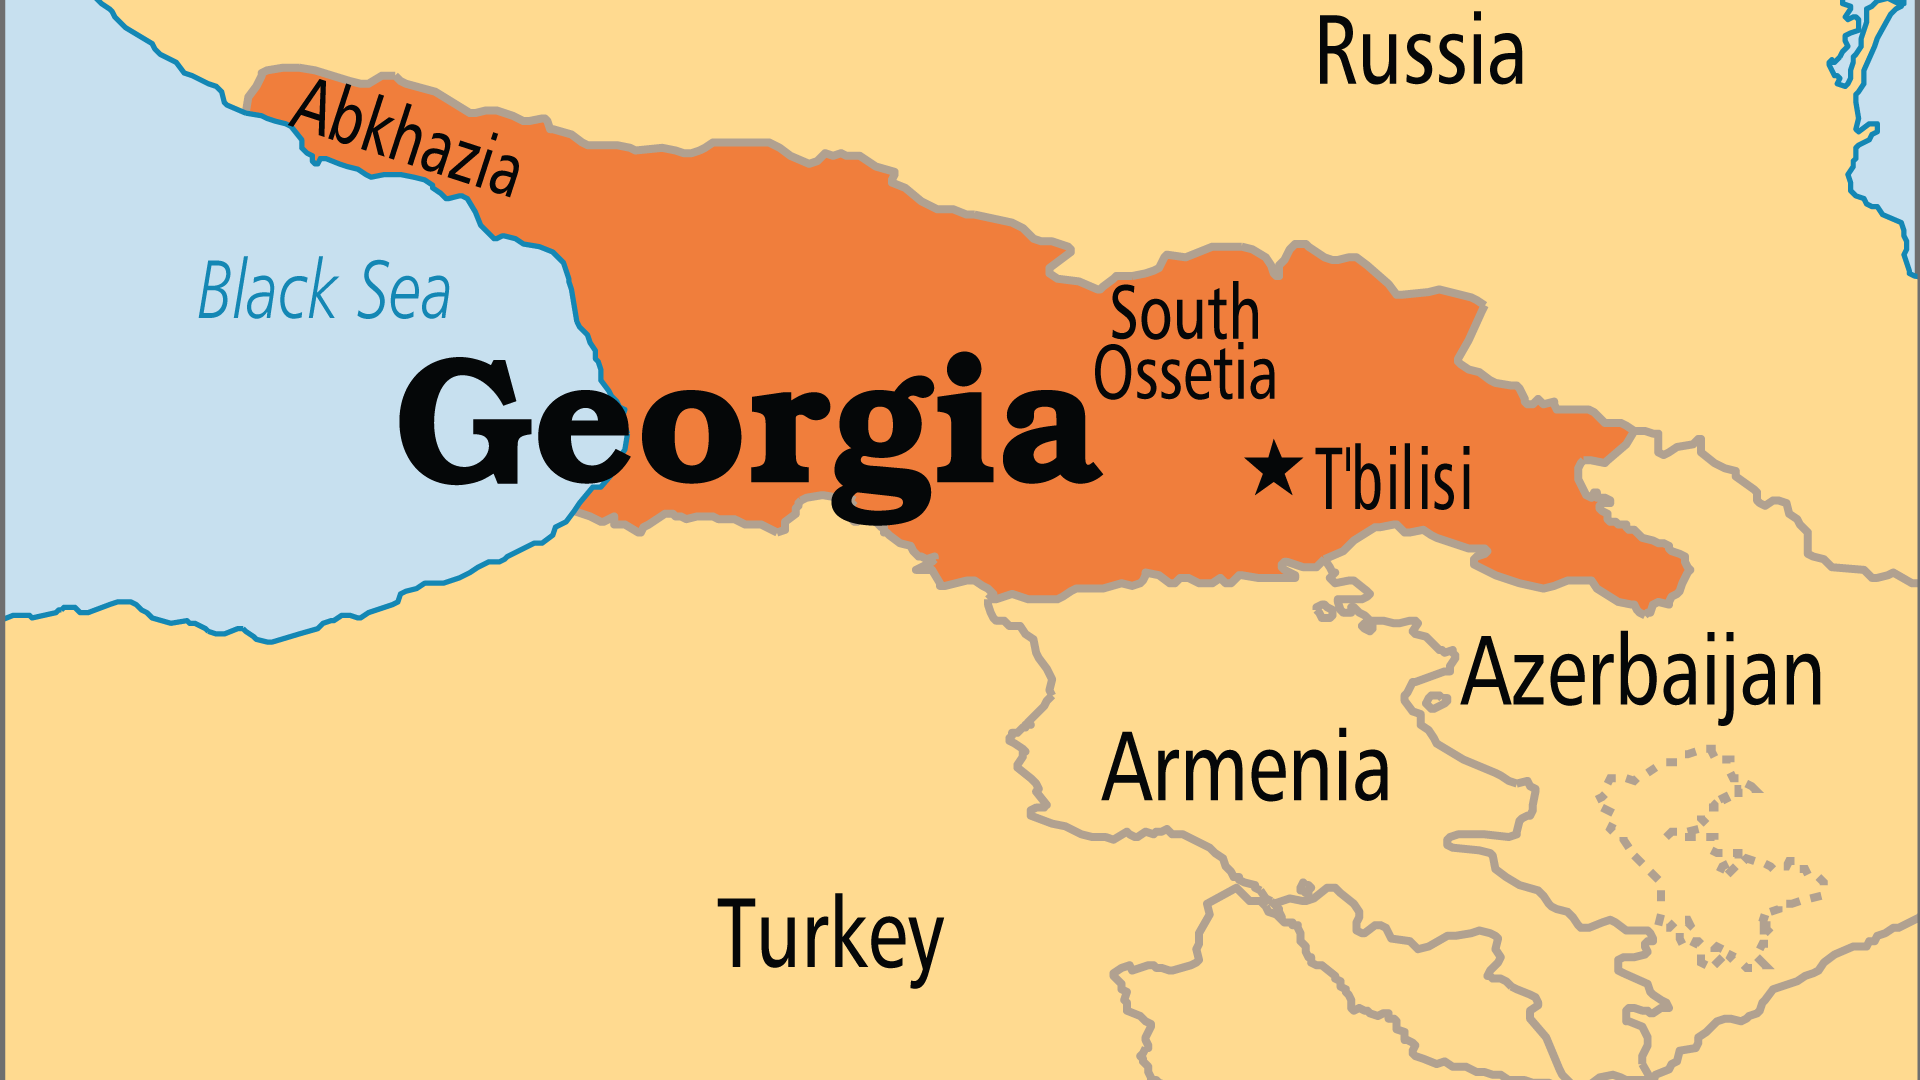 Georgia (Operation World)